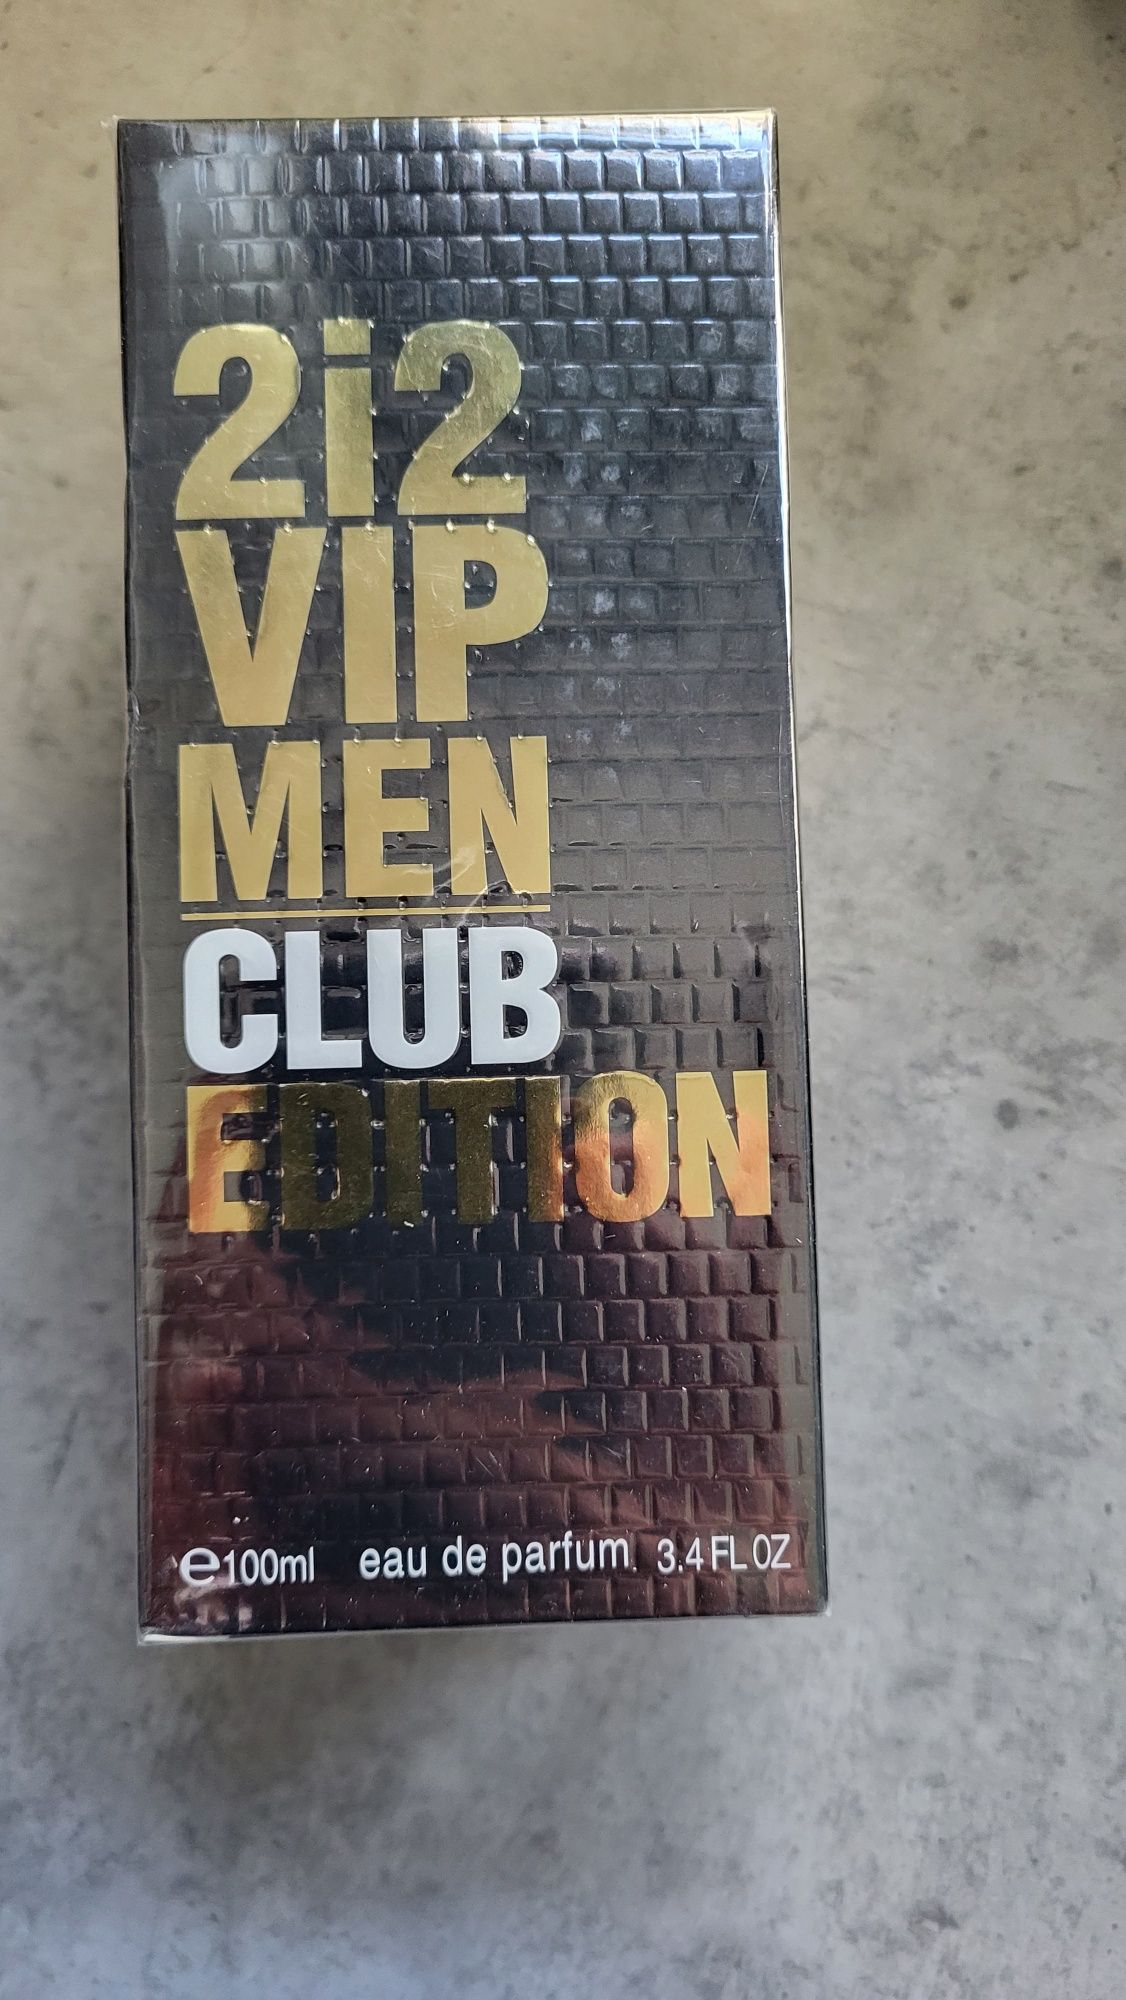 212 vip men club edition 100ml